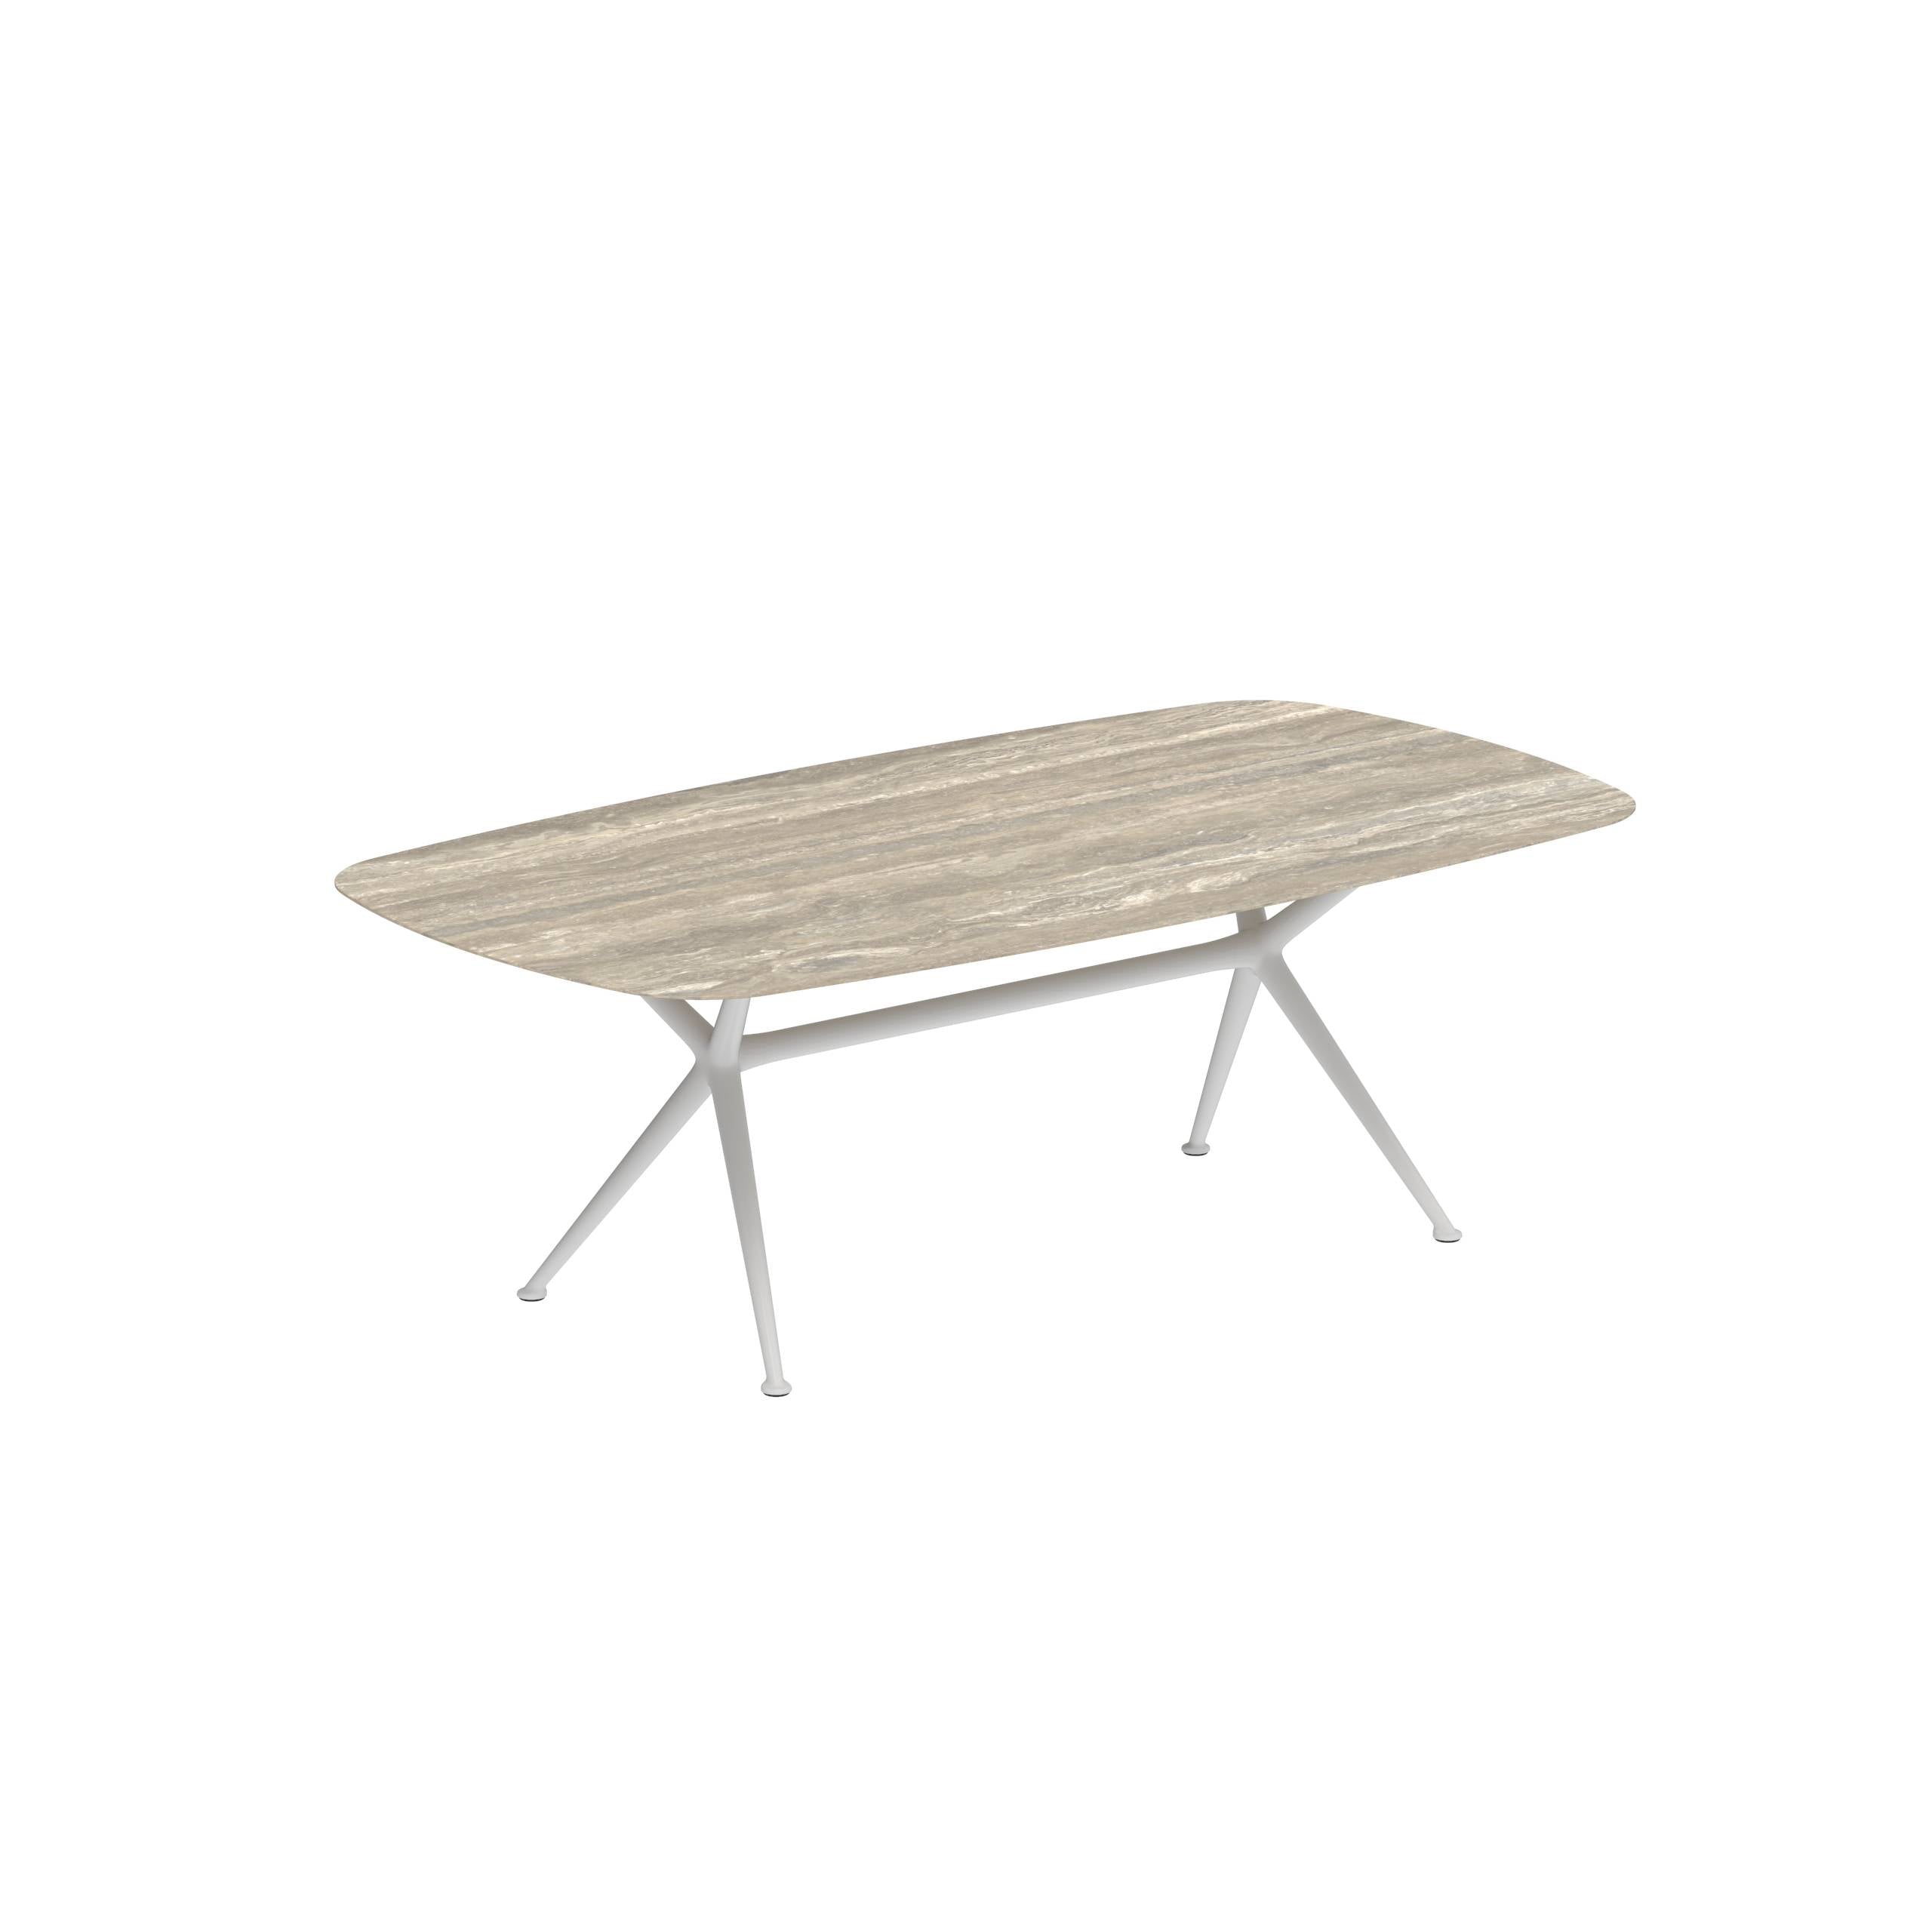 Exes Table 220x120cm Alu Legs White - Table Top Ceramic Travertino